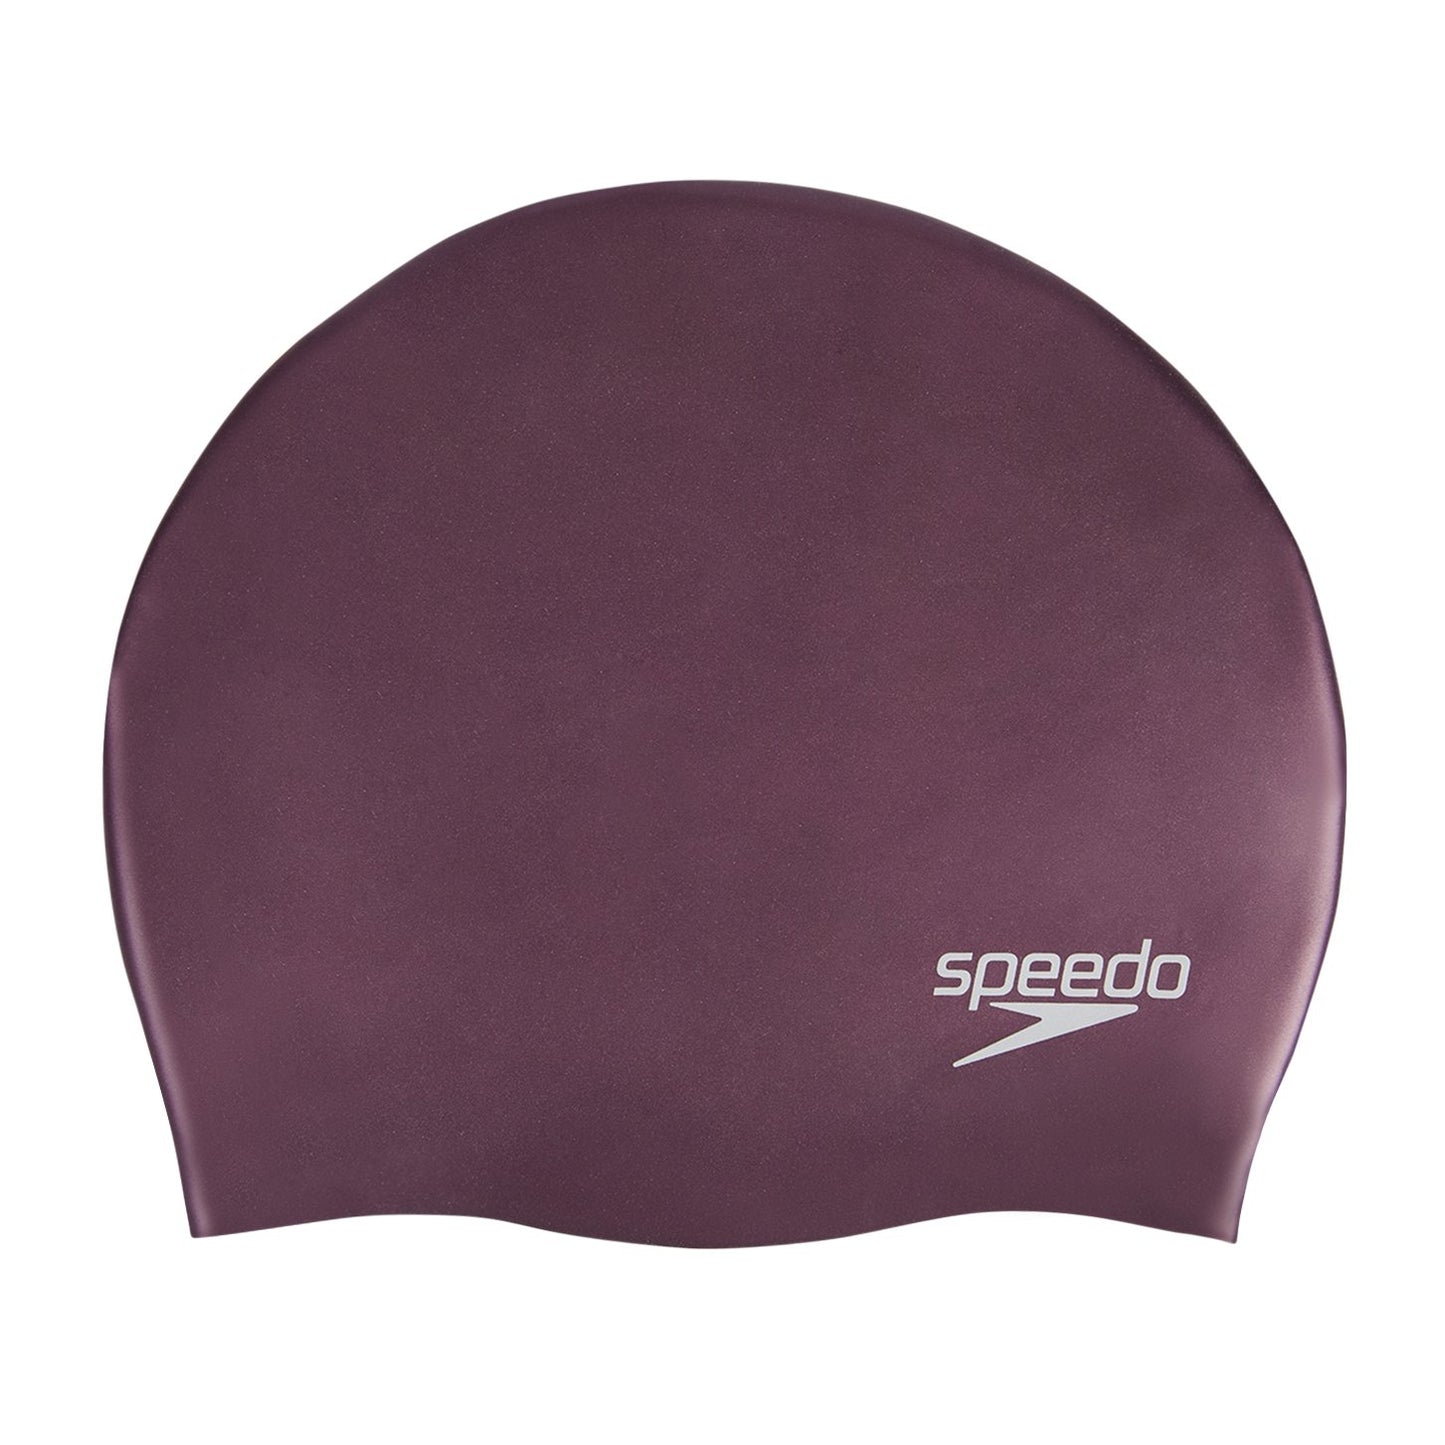 Speedo Unisex-Adult Plain Moulded Silicone Swimcap (Purple) - Best Price online Prokicksports.com